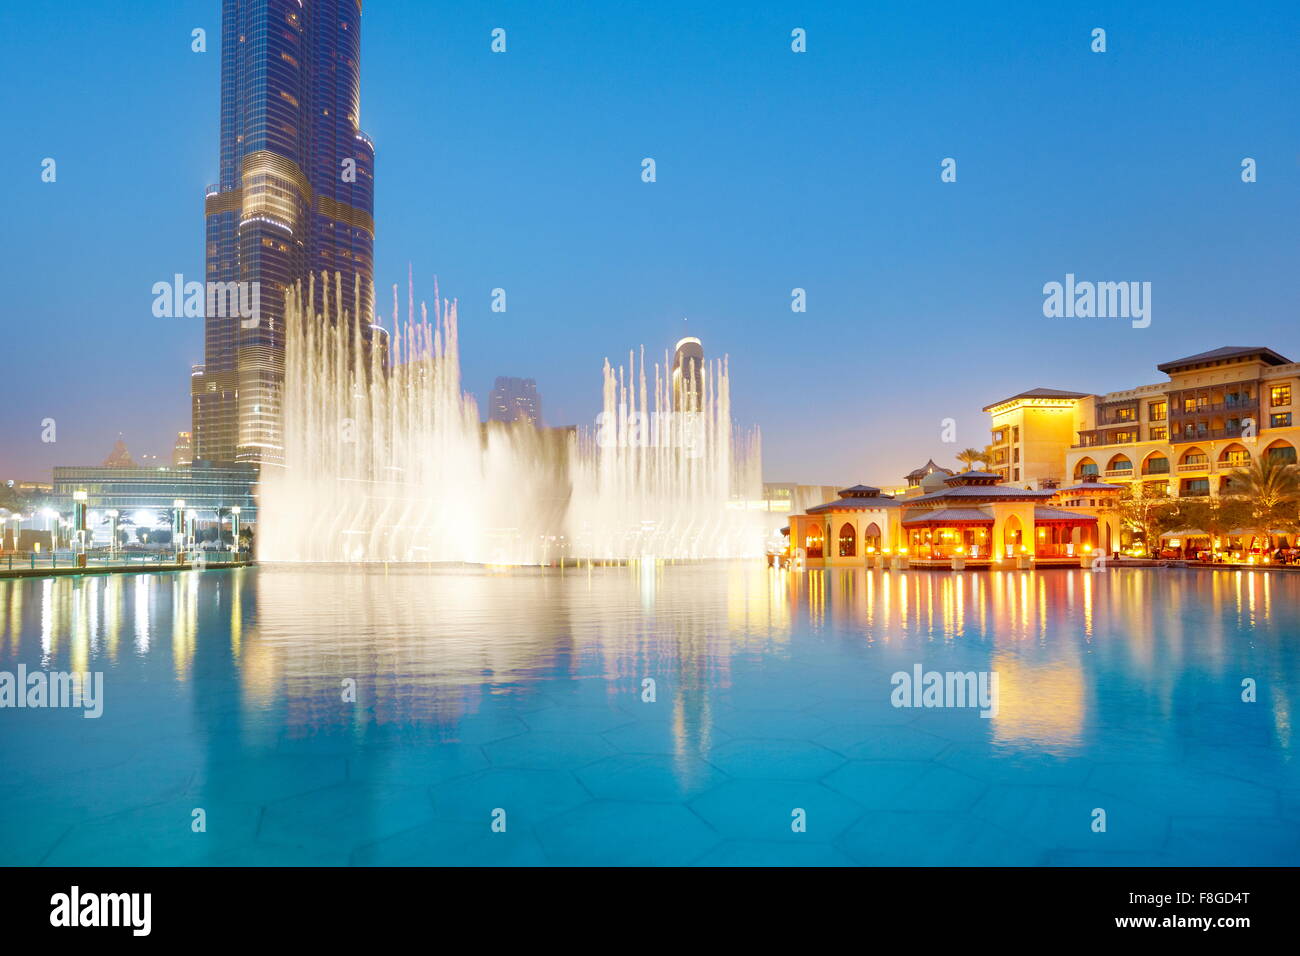 La città di Dubai - Burj Khalifa Tower, fontane mostra, Emirati Arabi Uniti Foto Stock